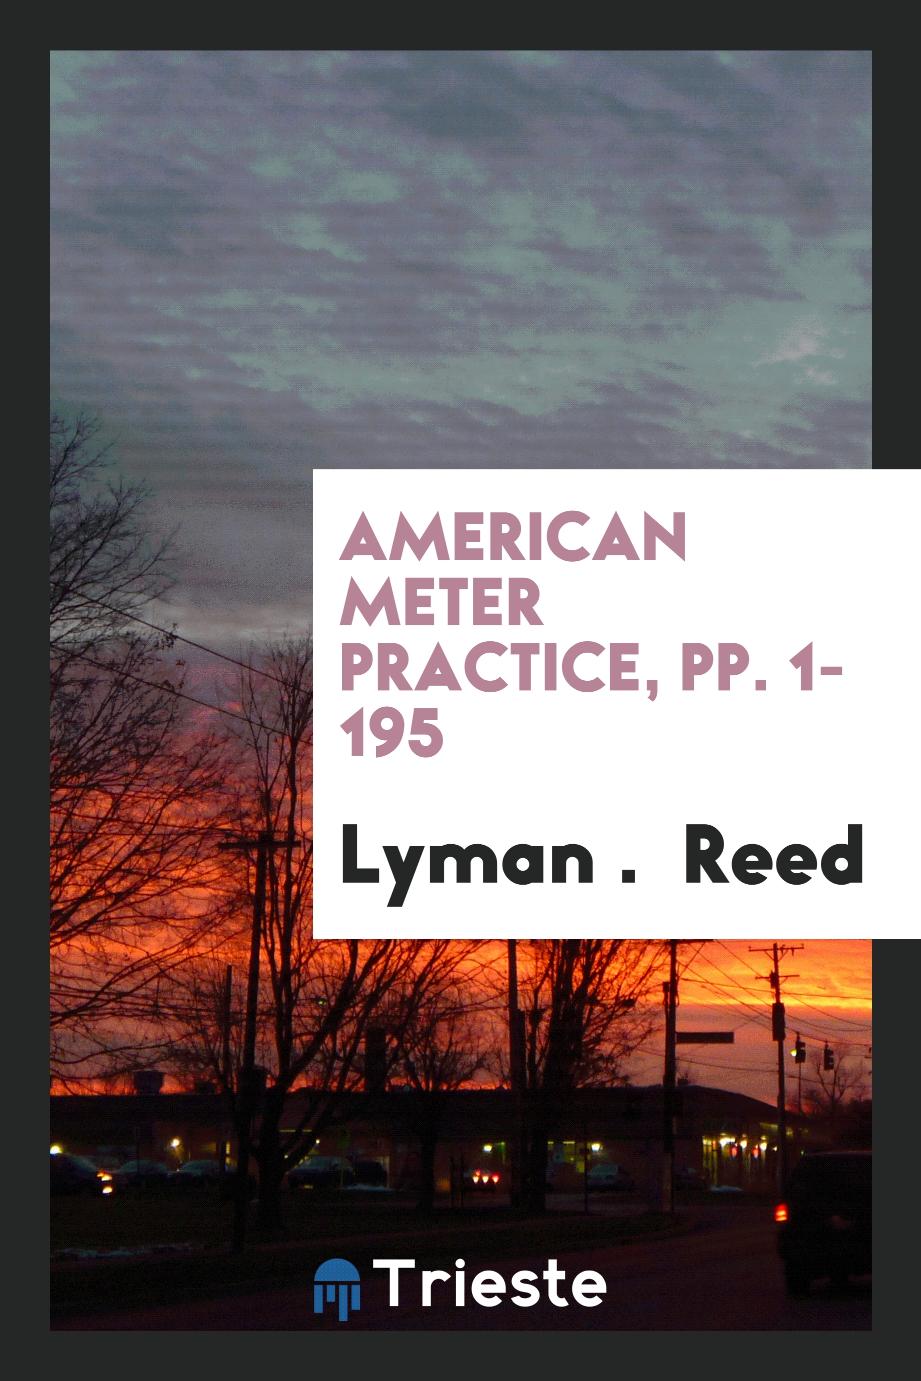 American Meter Practice, pp. 1-195